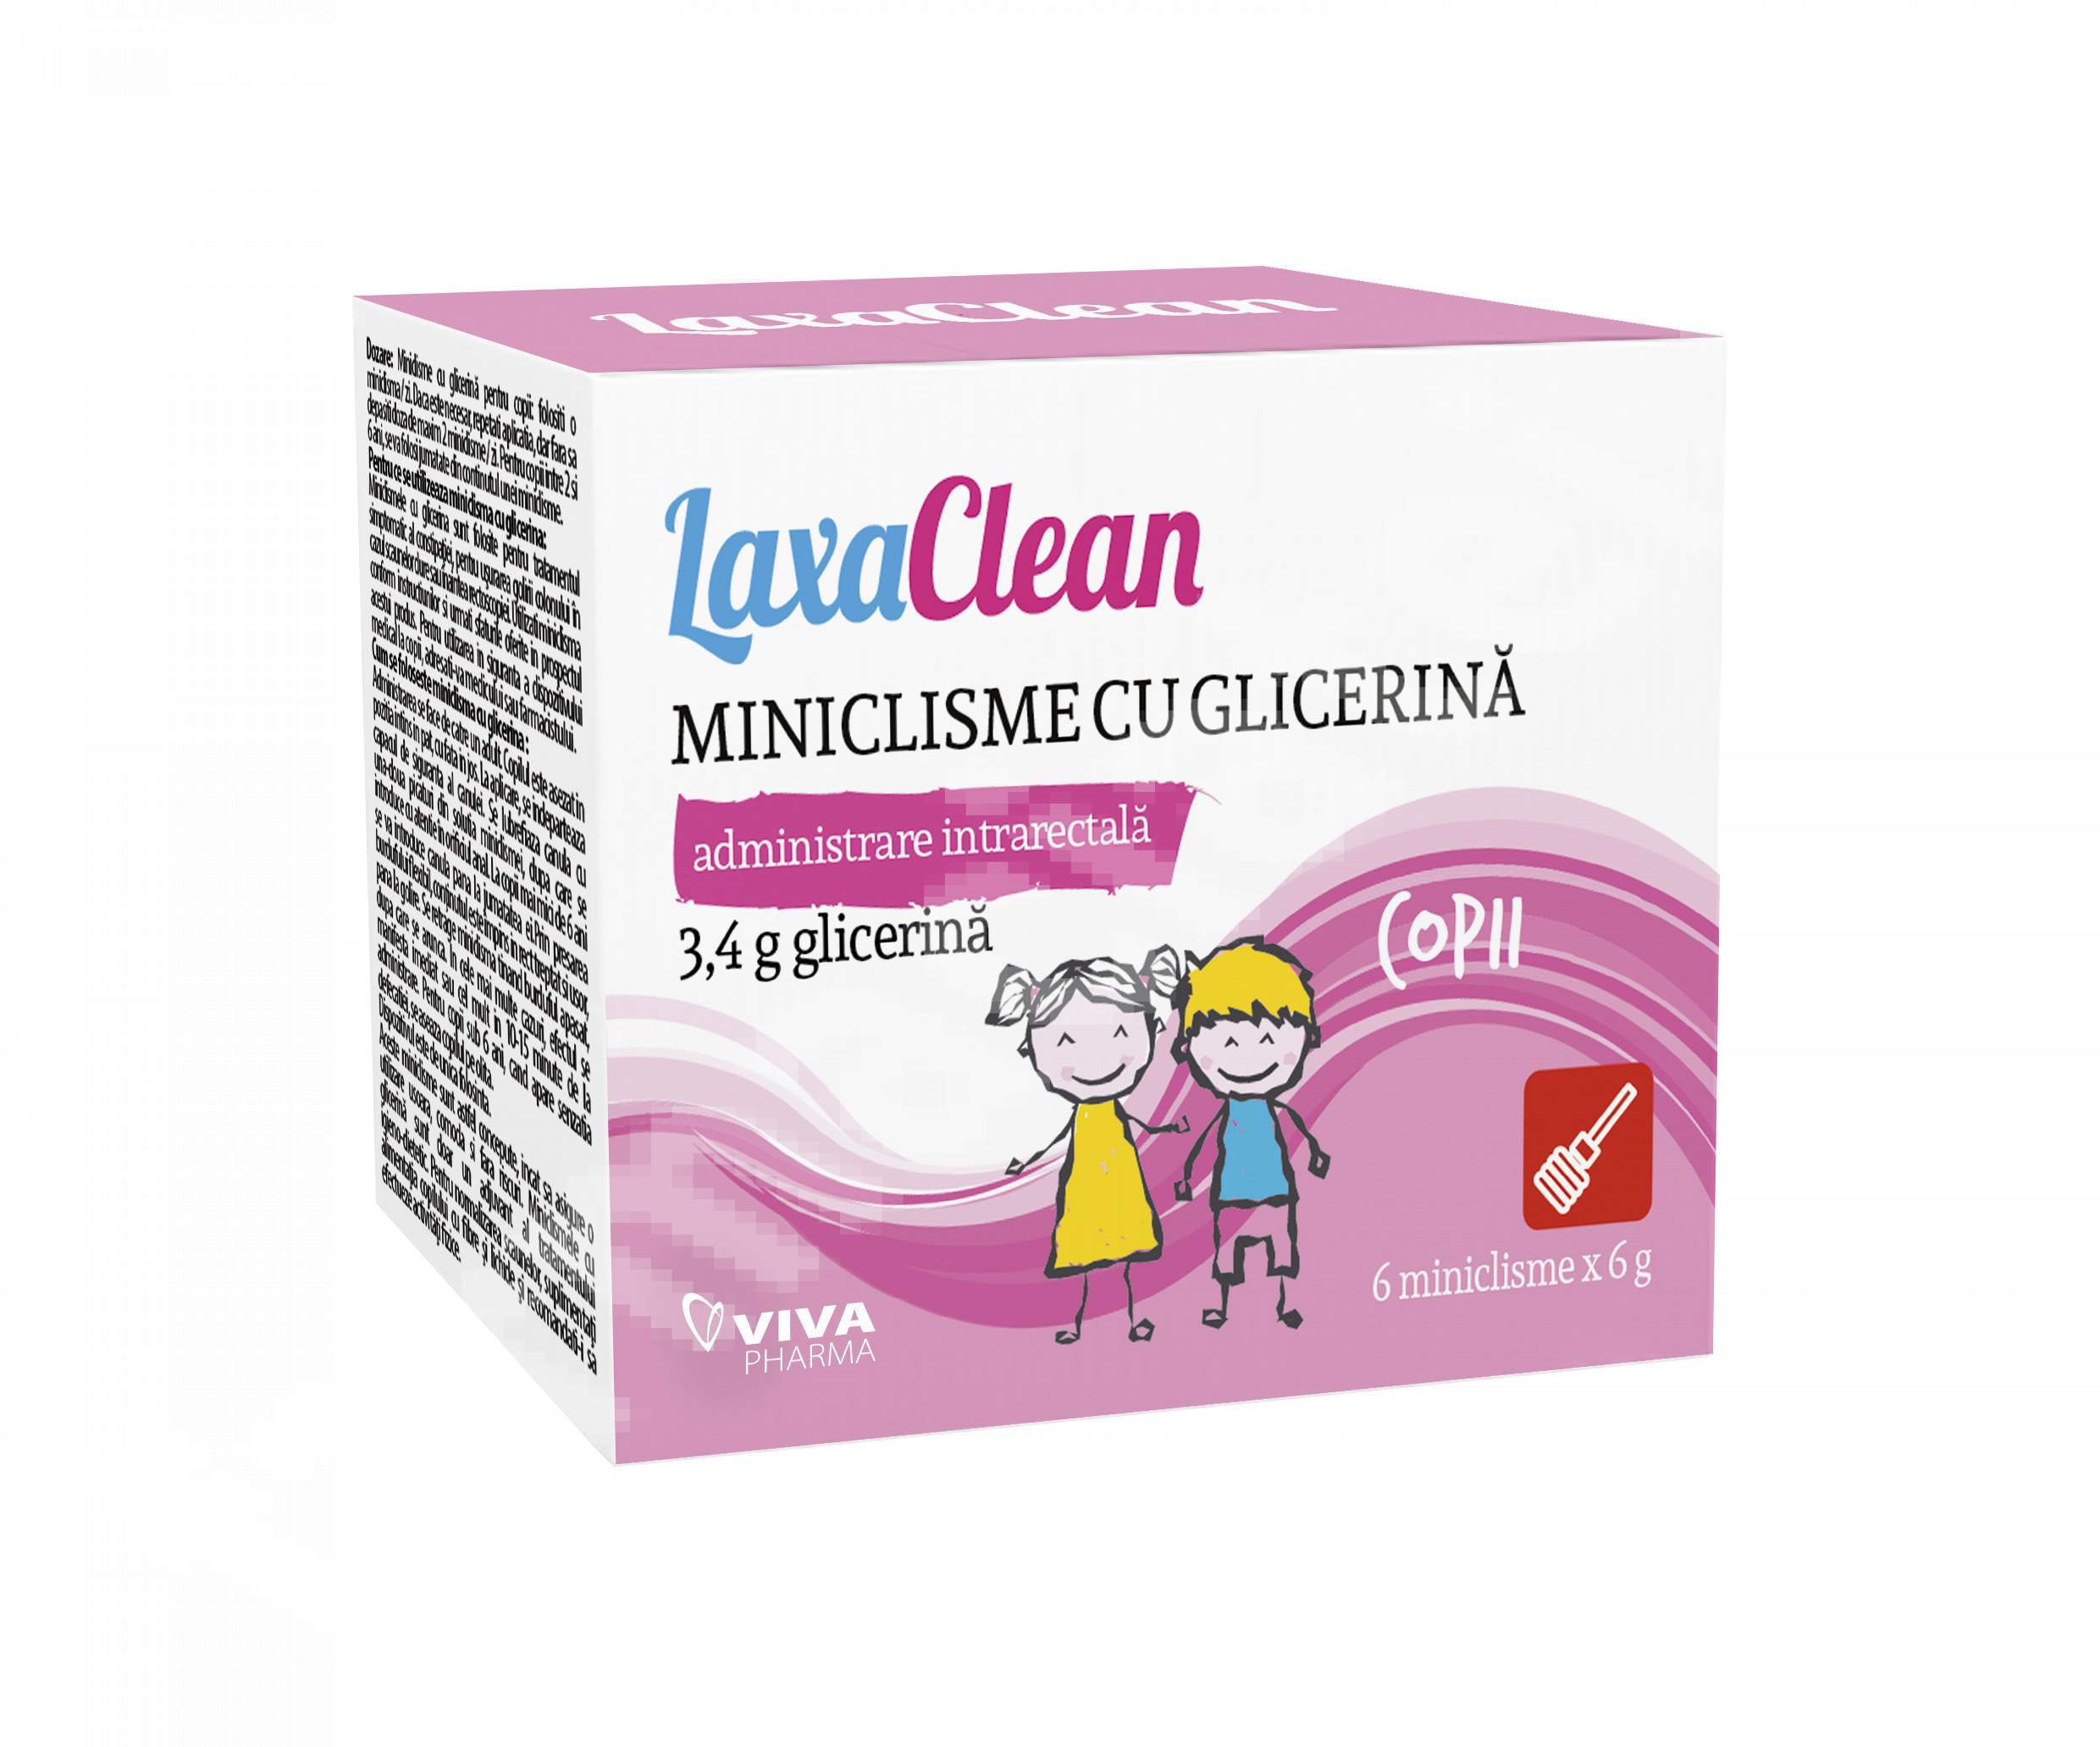 Miniclisme cu glicerina pentru copii LaxaClean, 6 bucati, Viva Pharma